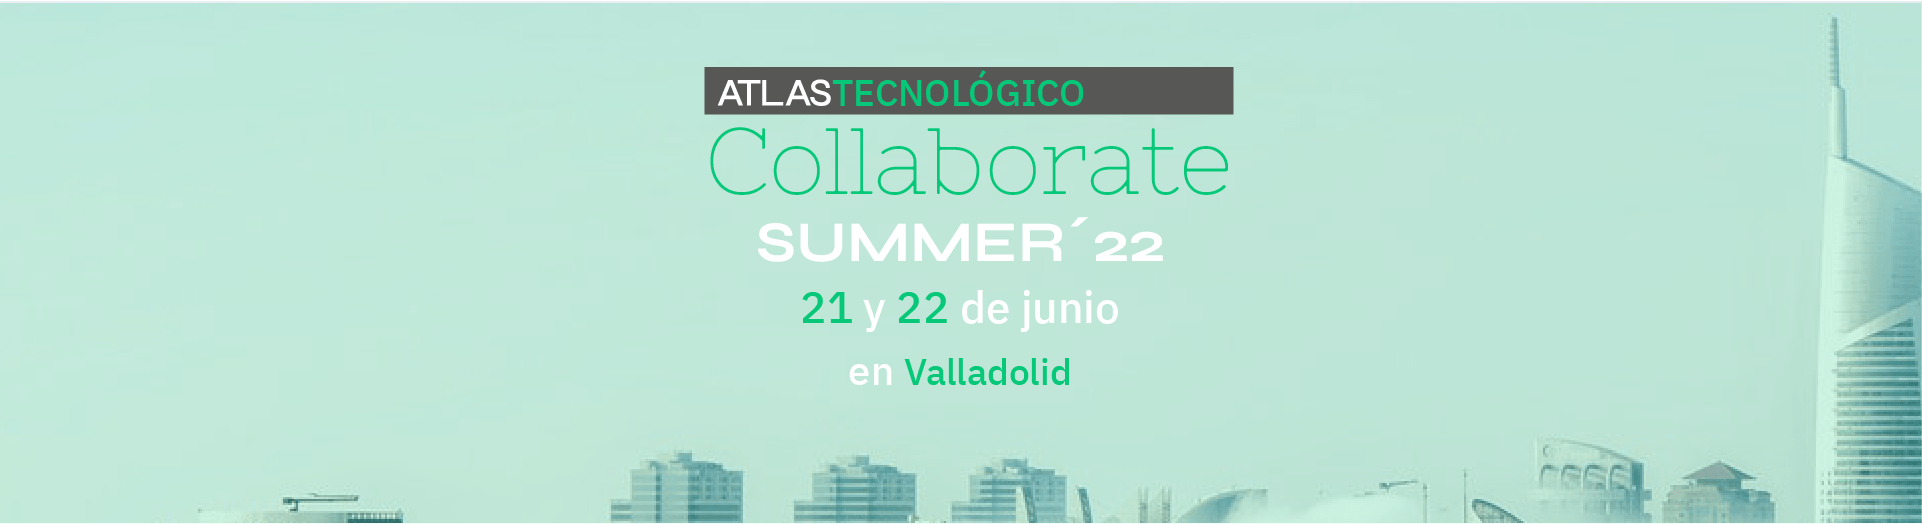 Atlas Tecnológico Collaborate Summer’22